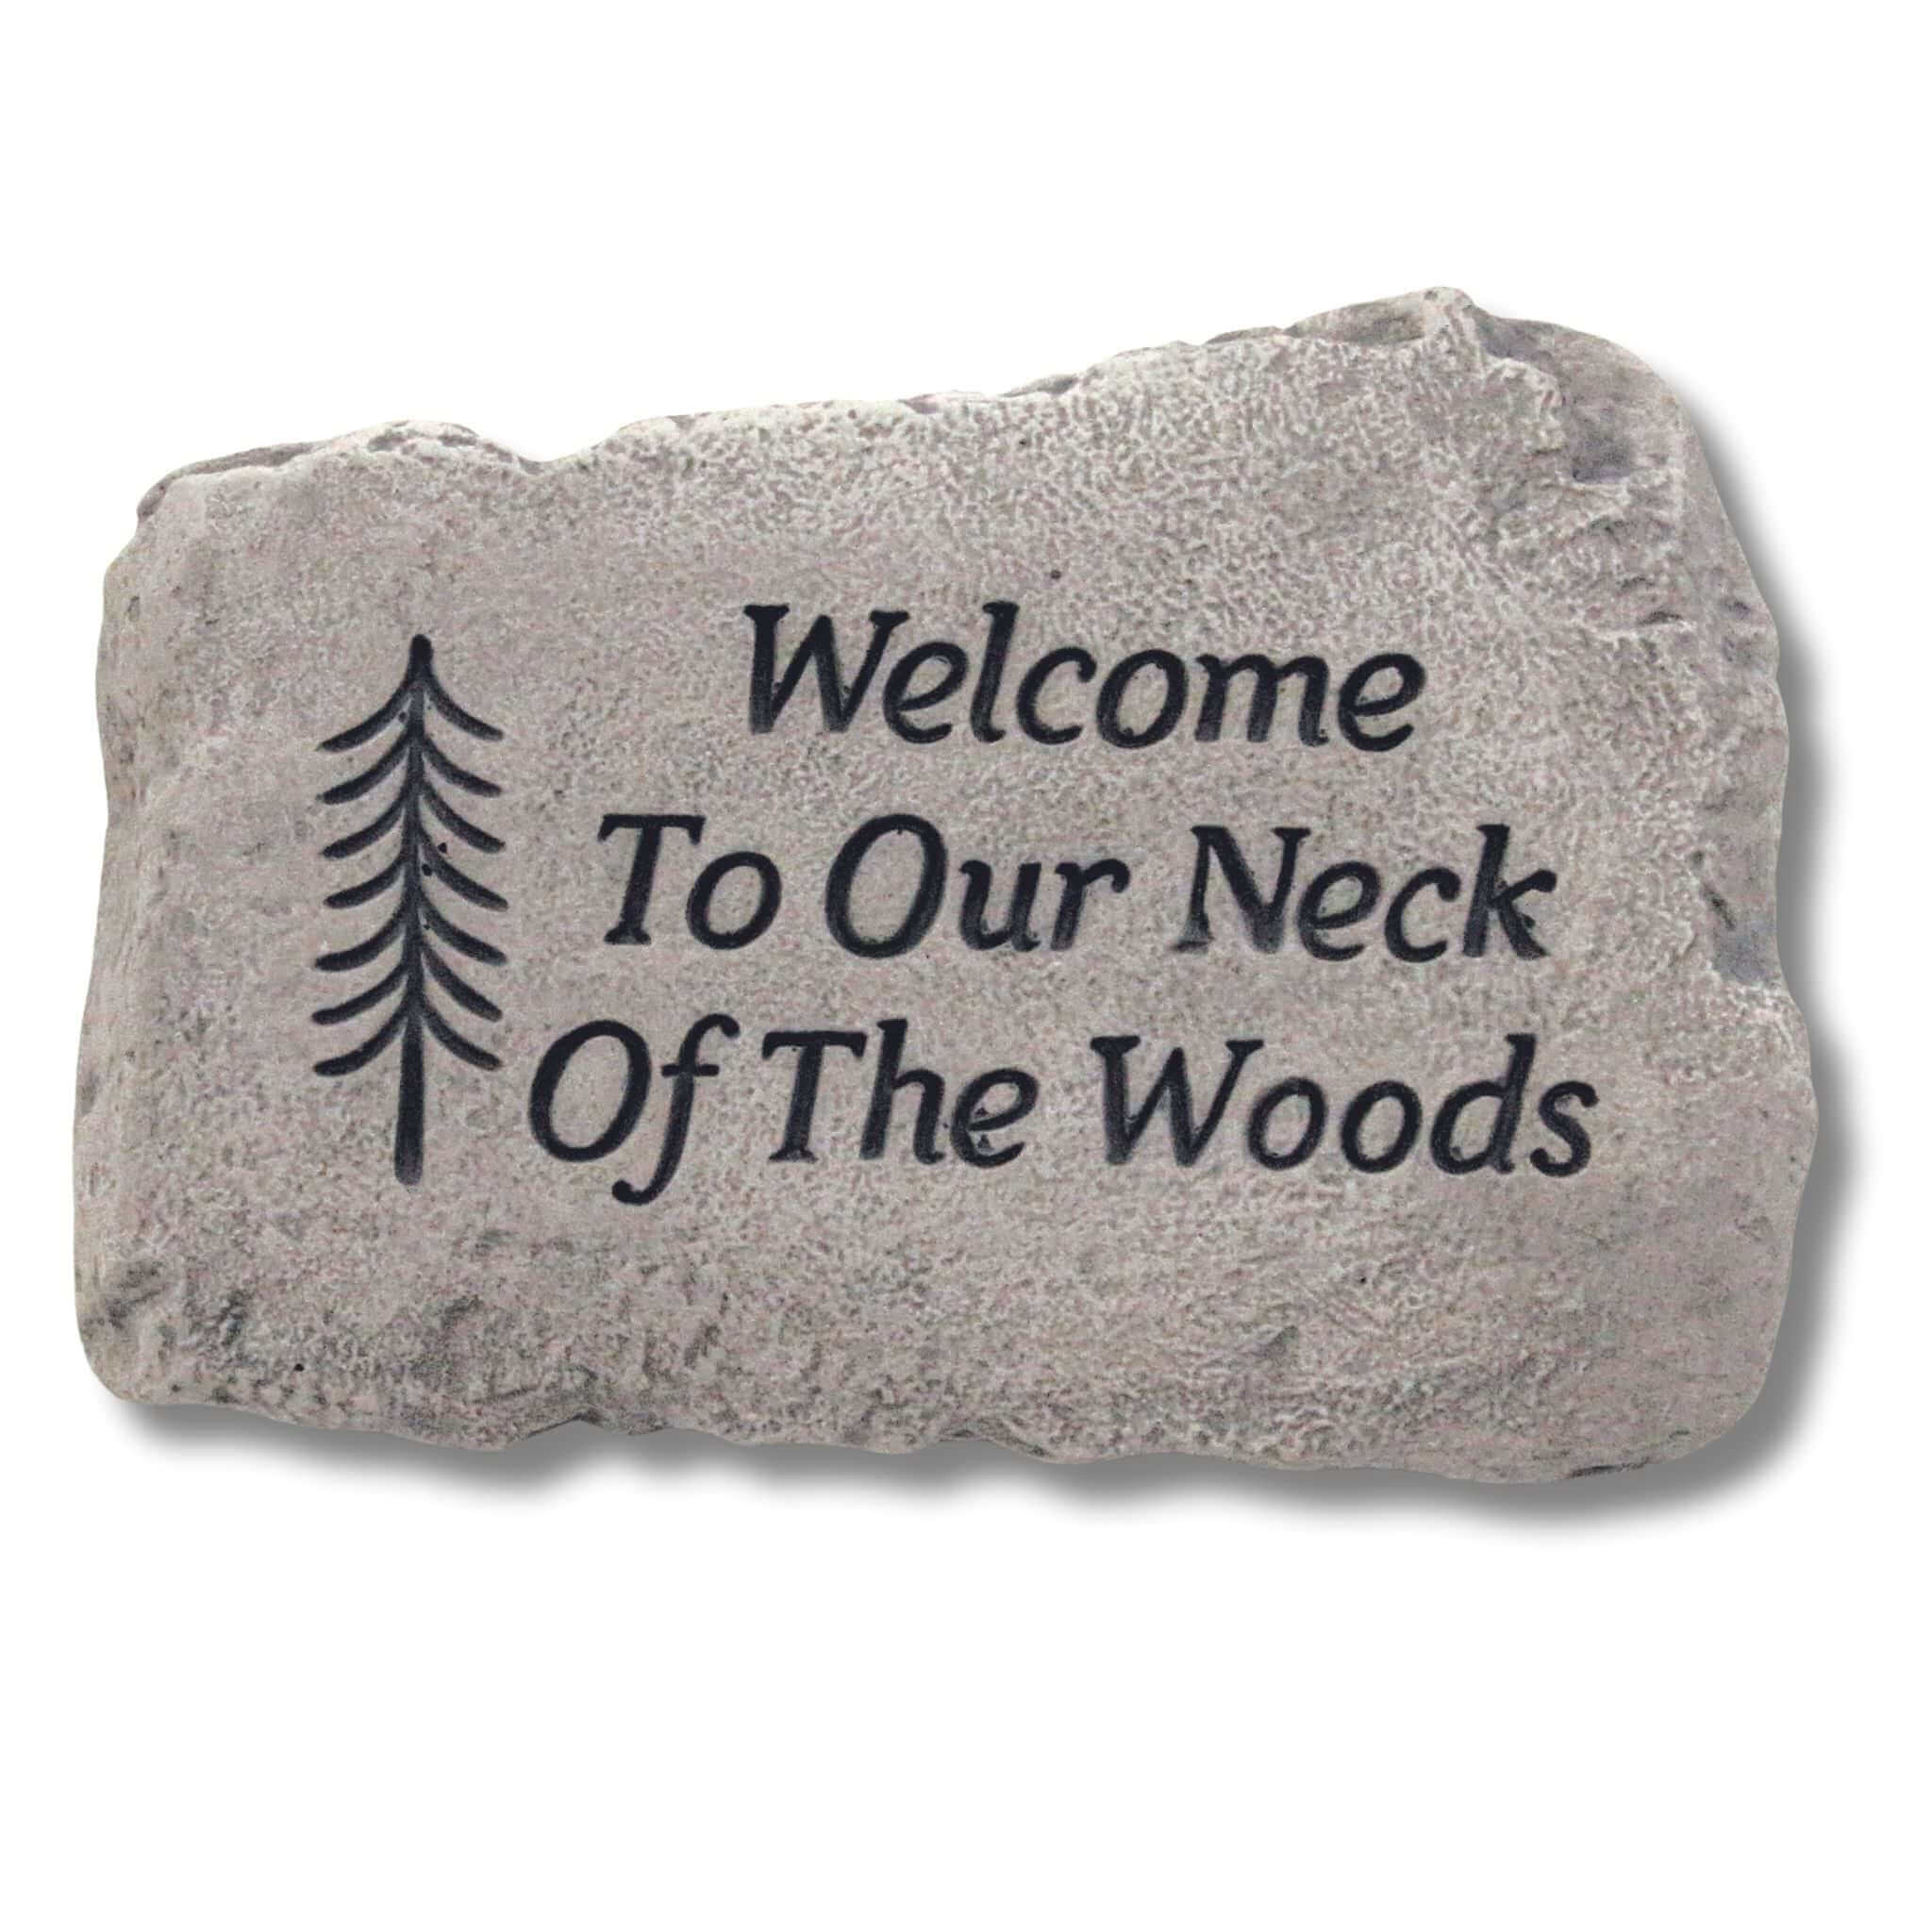 Neck of the Woods Concrete Garden Greeting Stone - Massarellis #1749